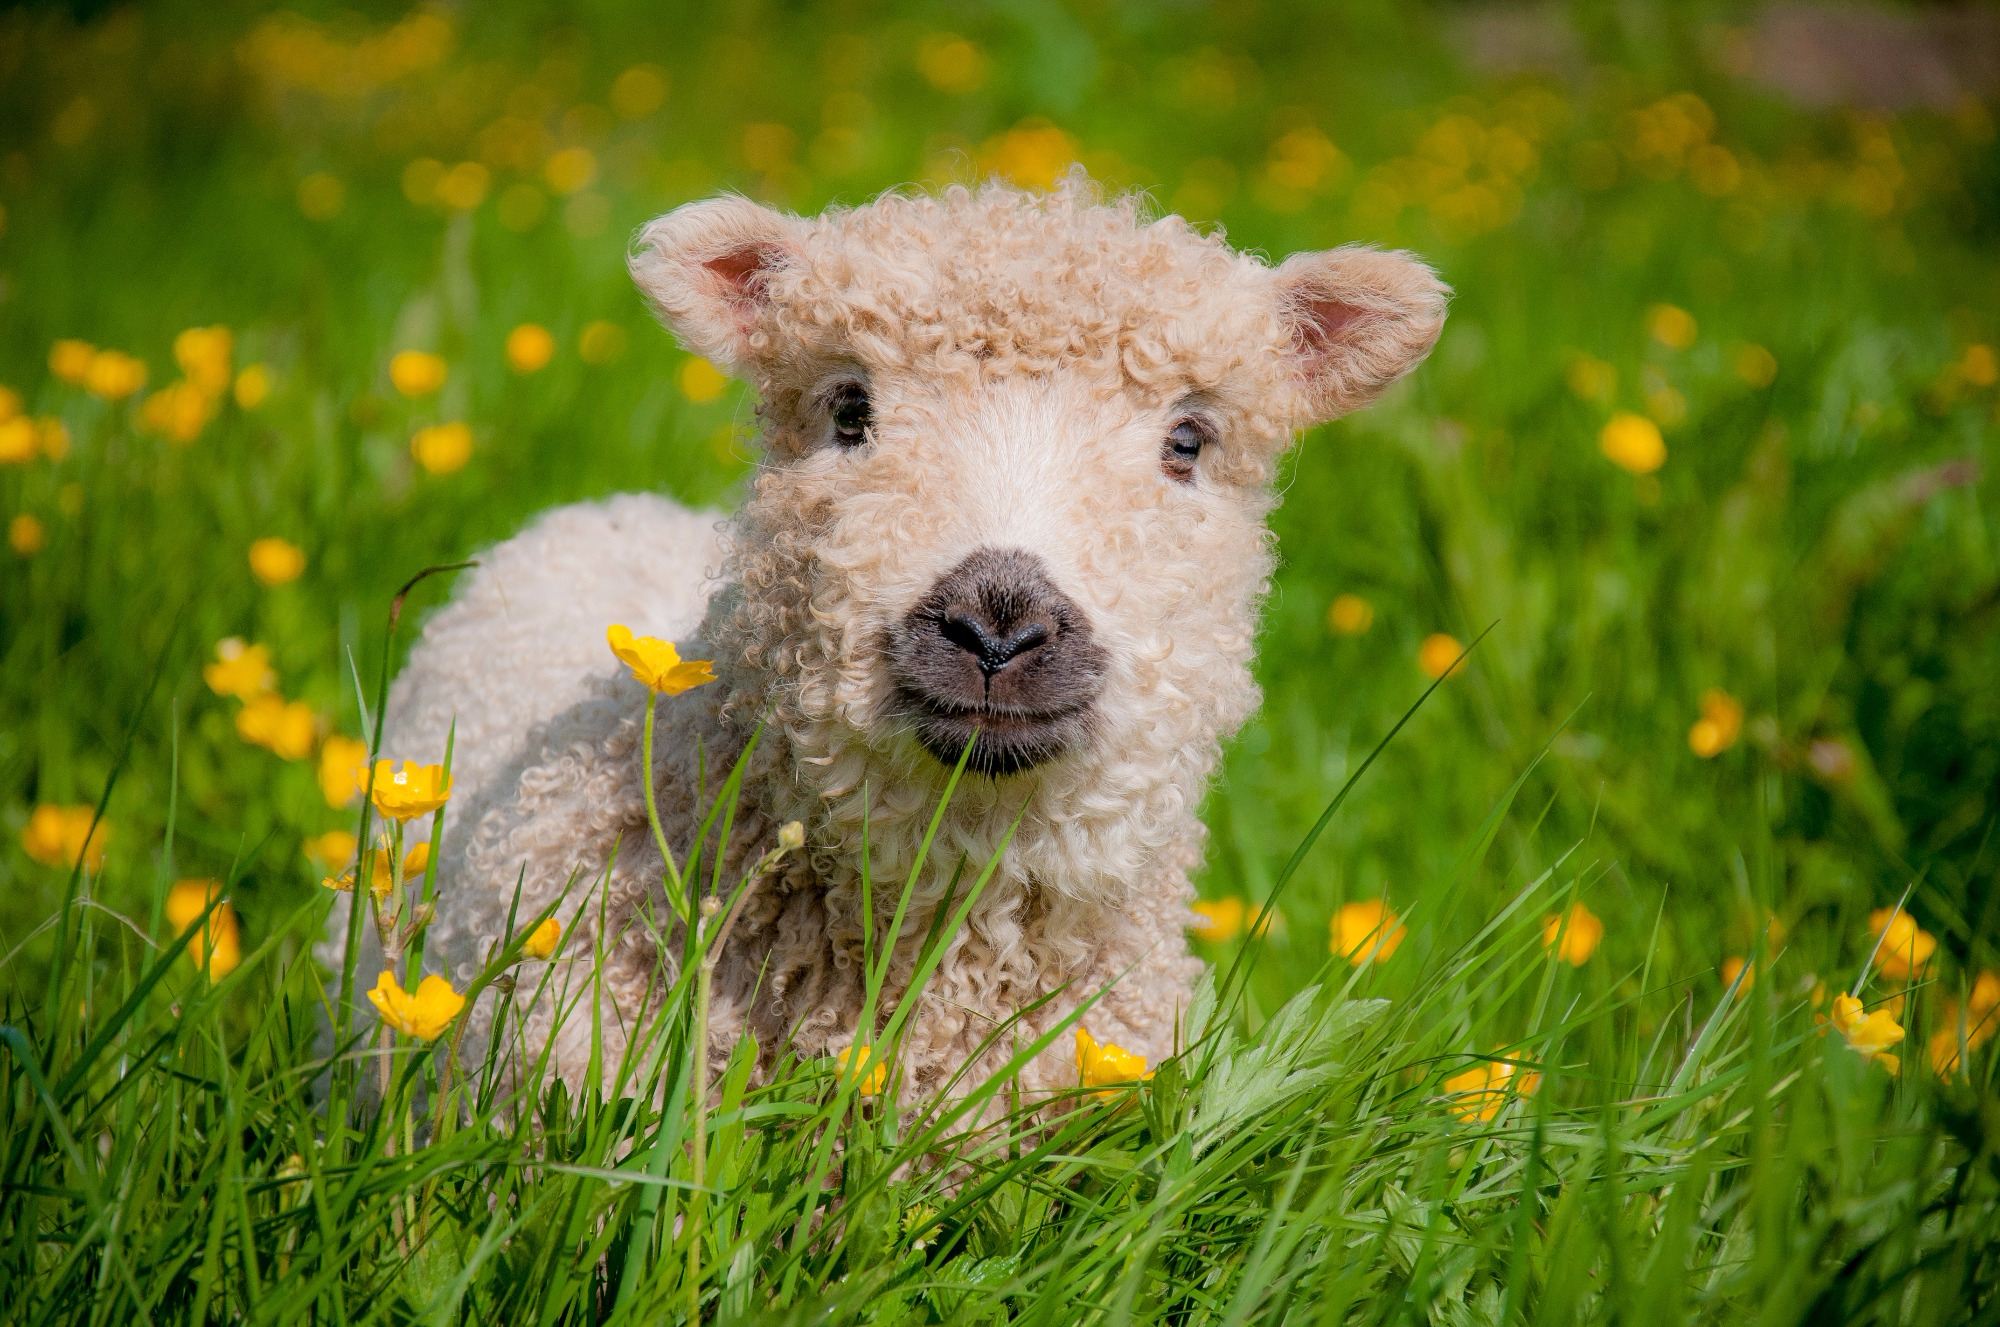 Greyface Dartmoor Lamb. Greeting Card